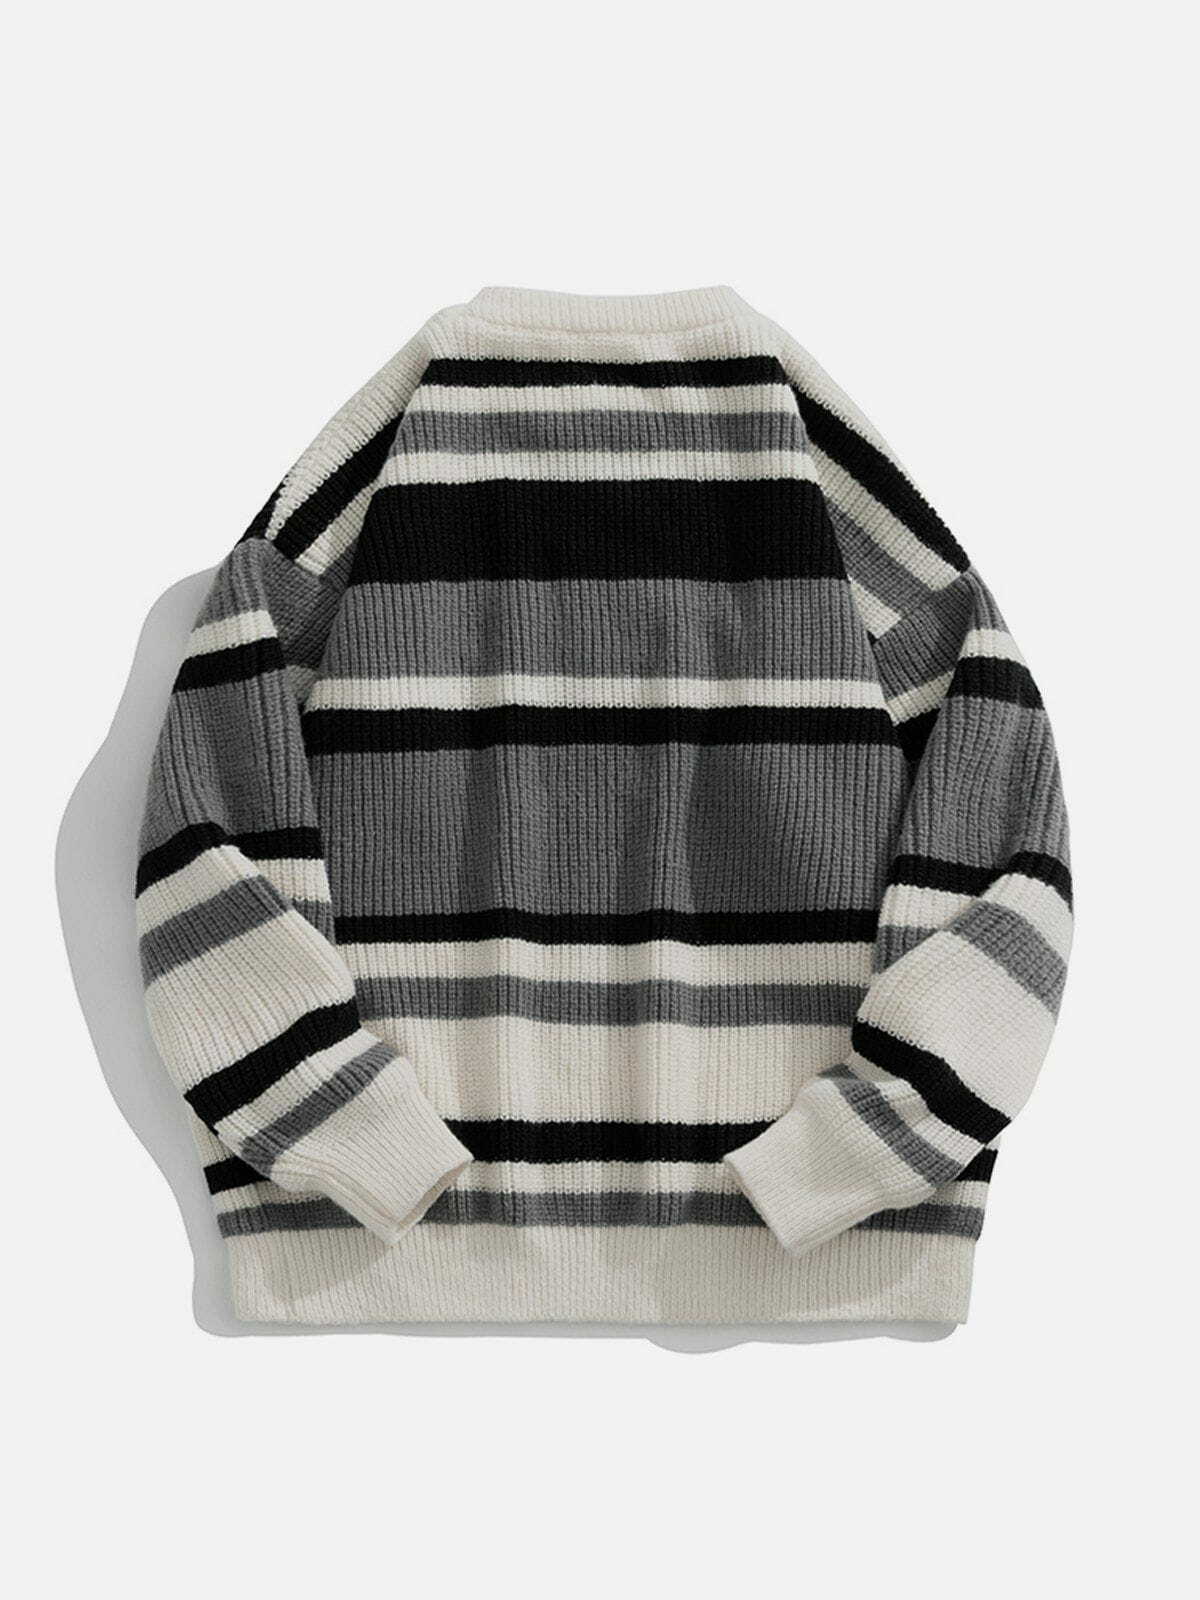 color block striped sweater edgy retro y2k fashion 2000